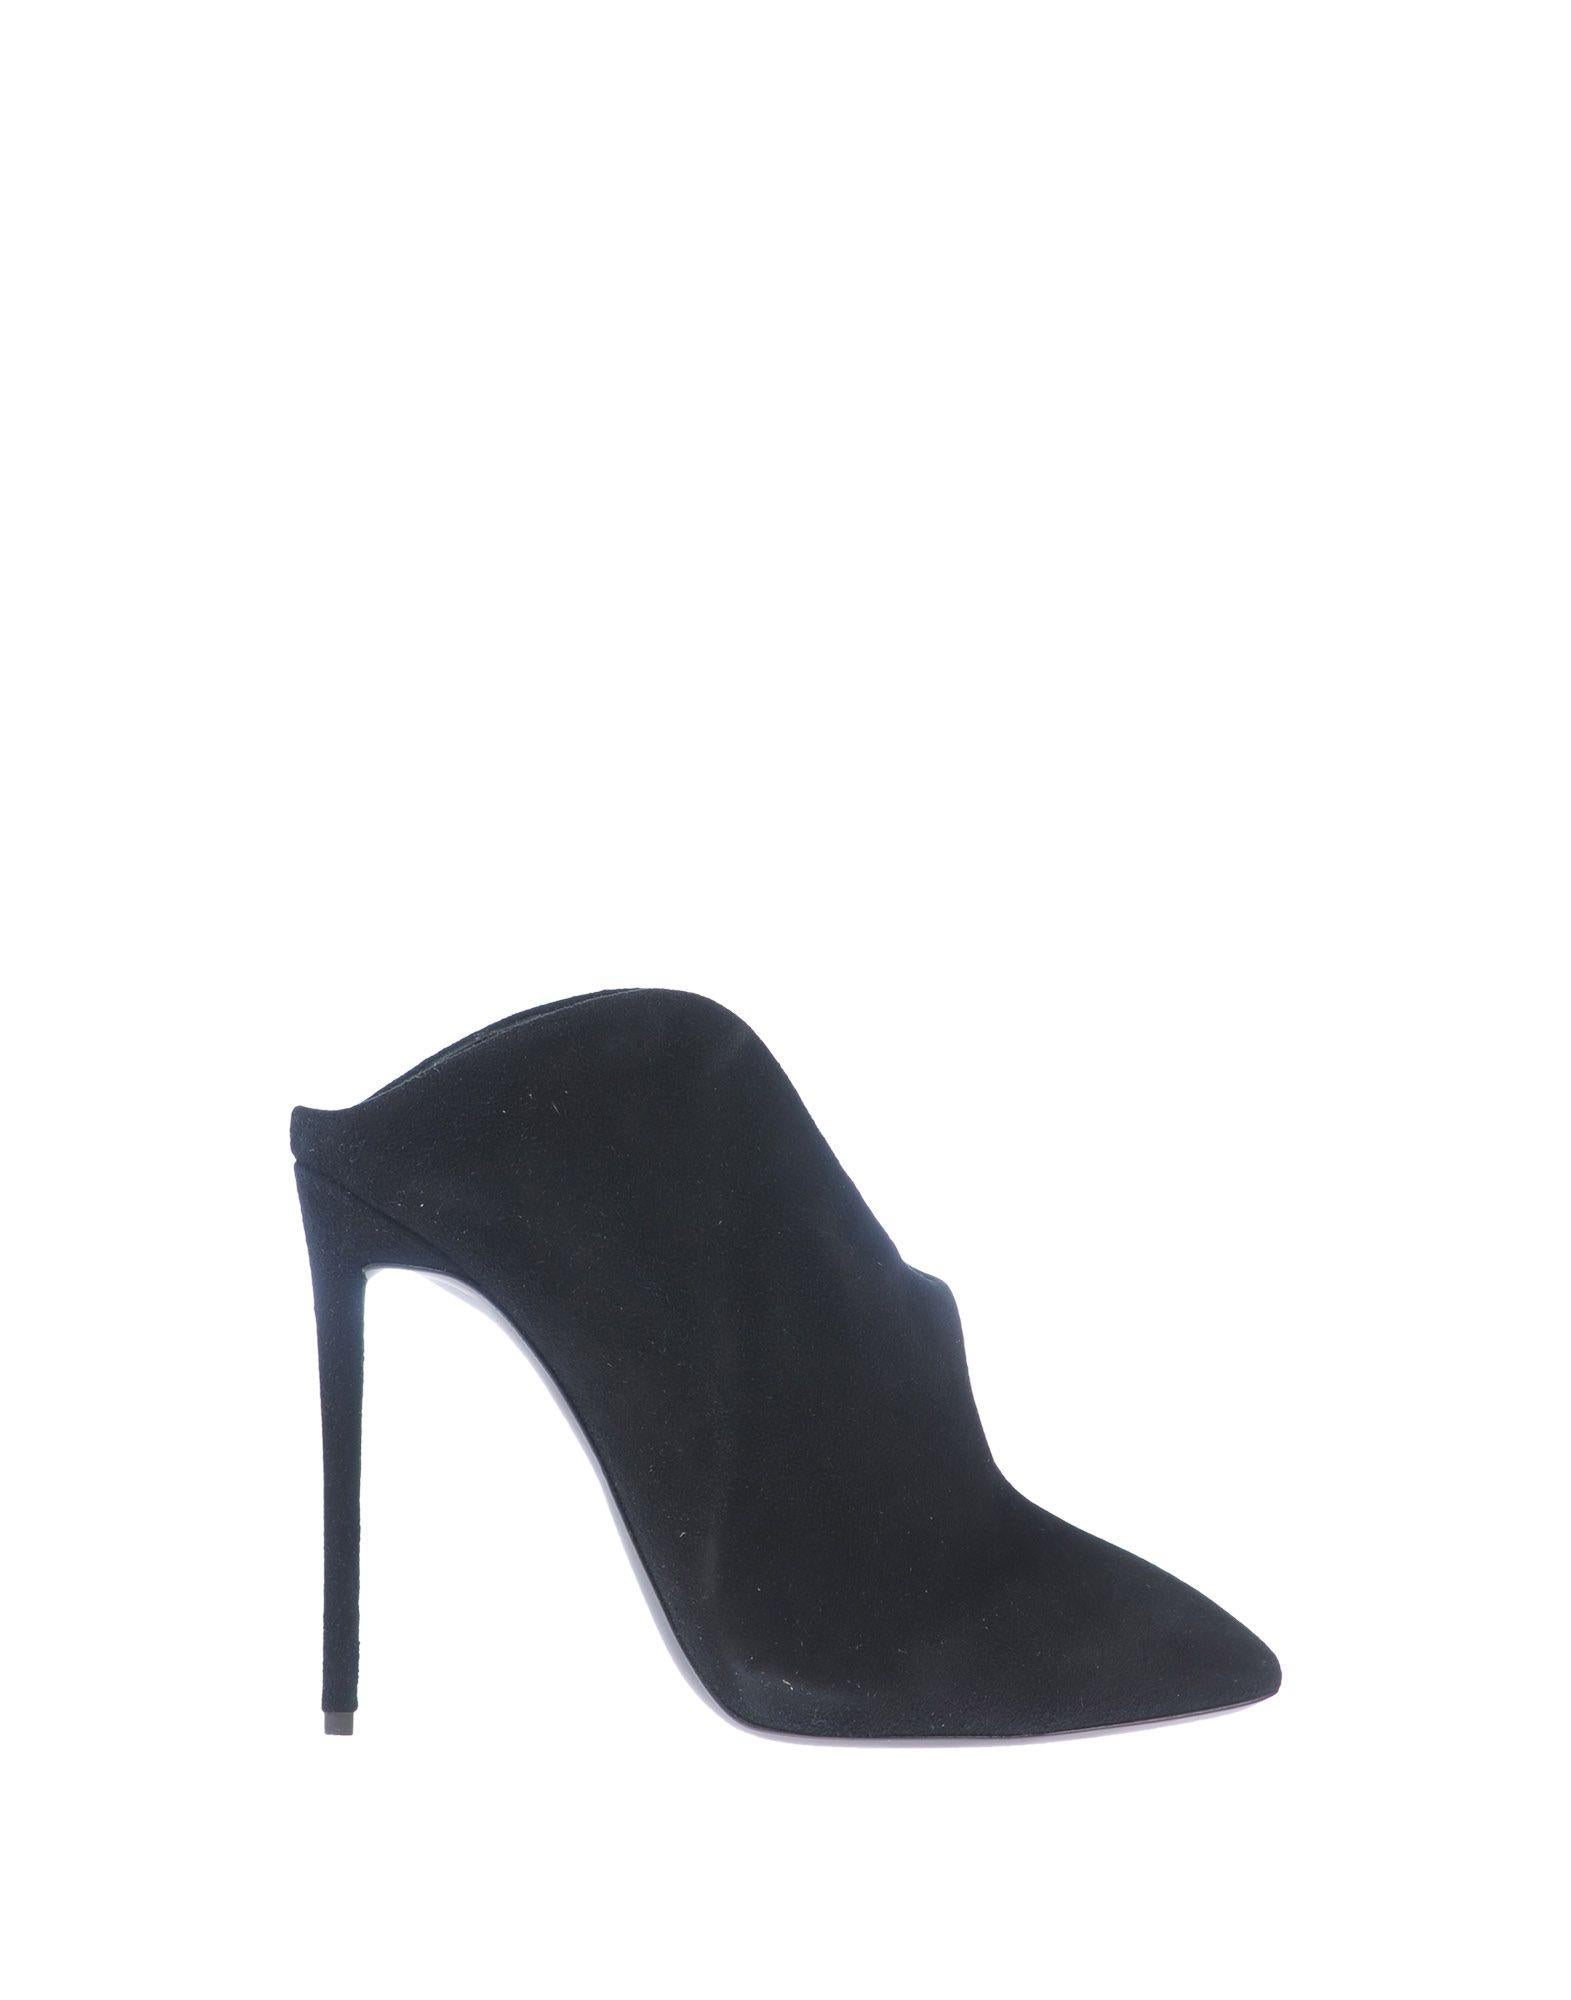 Women's Giuseppe Zanotti NEW Black Suede Evening Sandals Slide In Mules Heels in Box